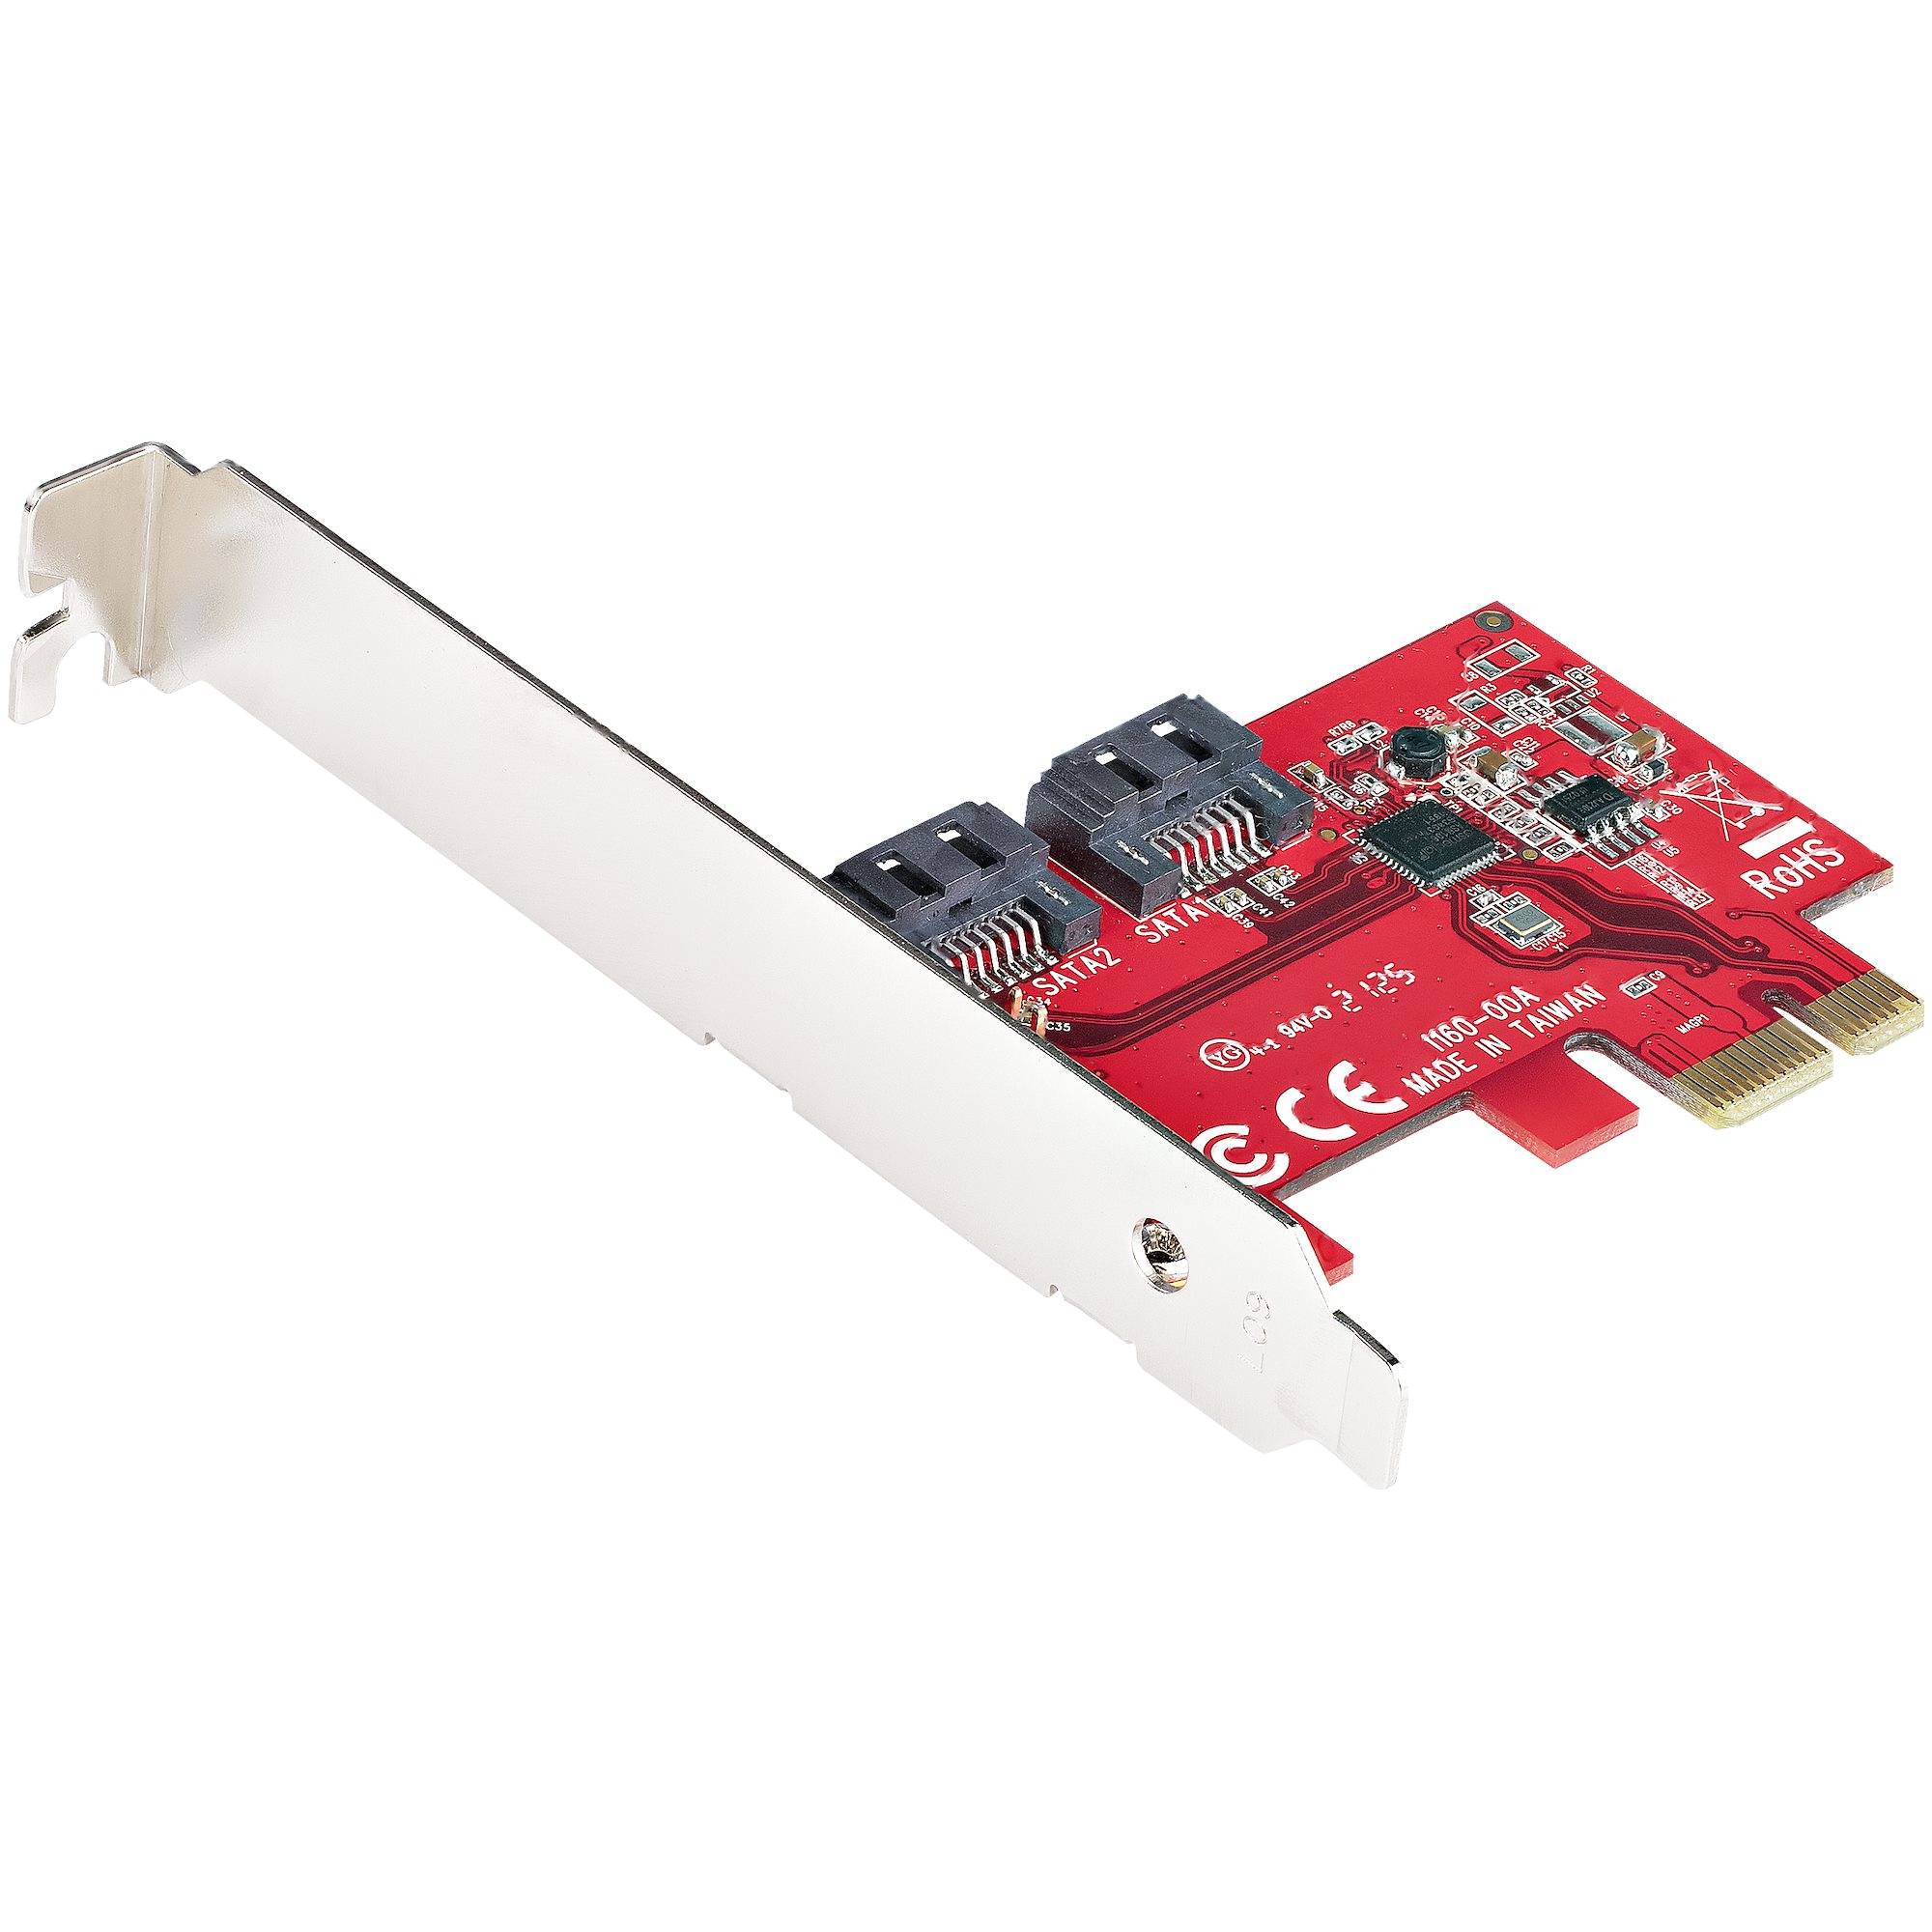 Rca Informatique - Image du produit : SATA PCIE CARD 2 PORT NO-RAIDPCI EXPRESS SATA 6GBPS AS